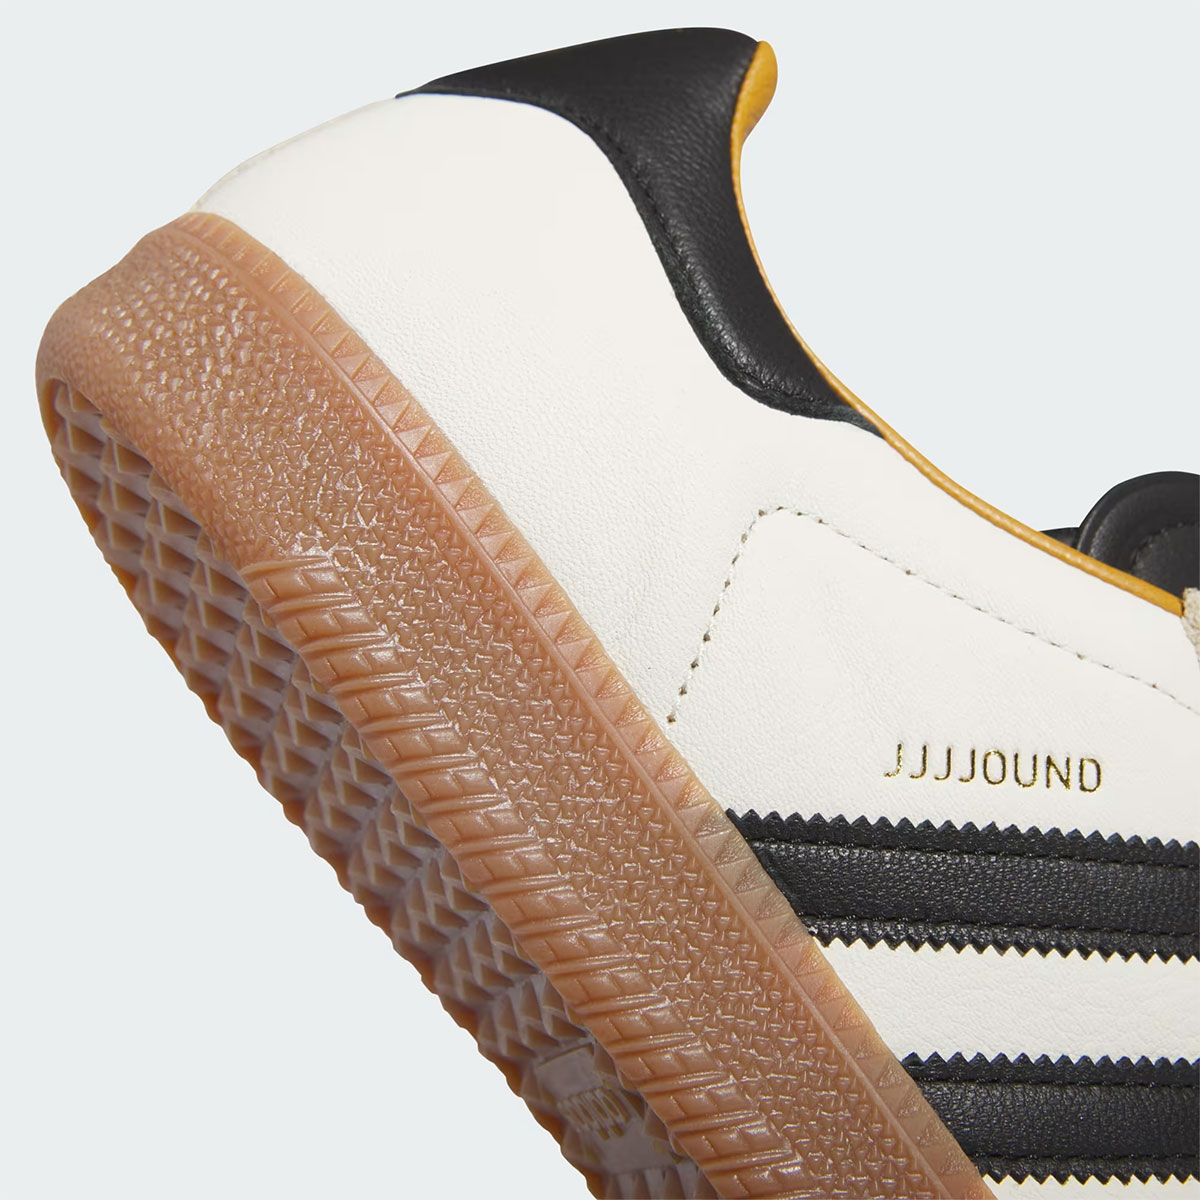 jjjjound adidas samba off white core black gum id8708 release date 3